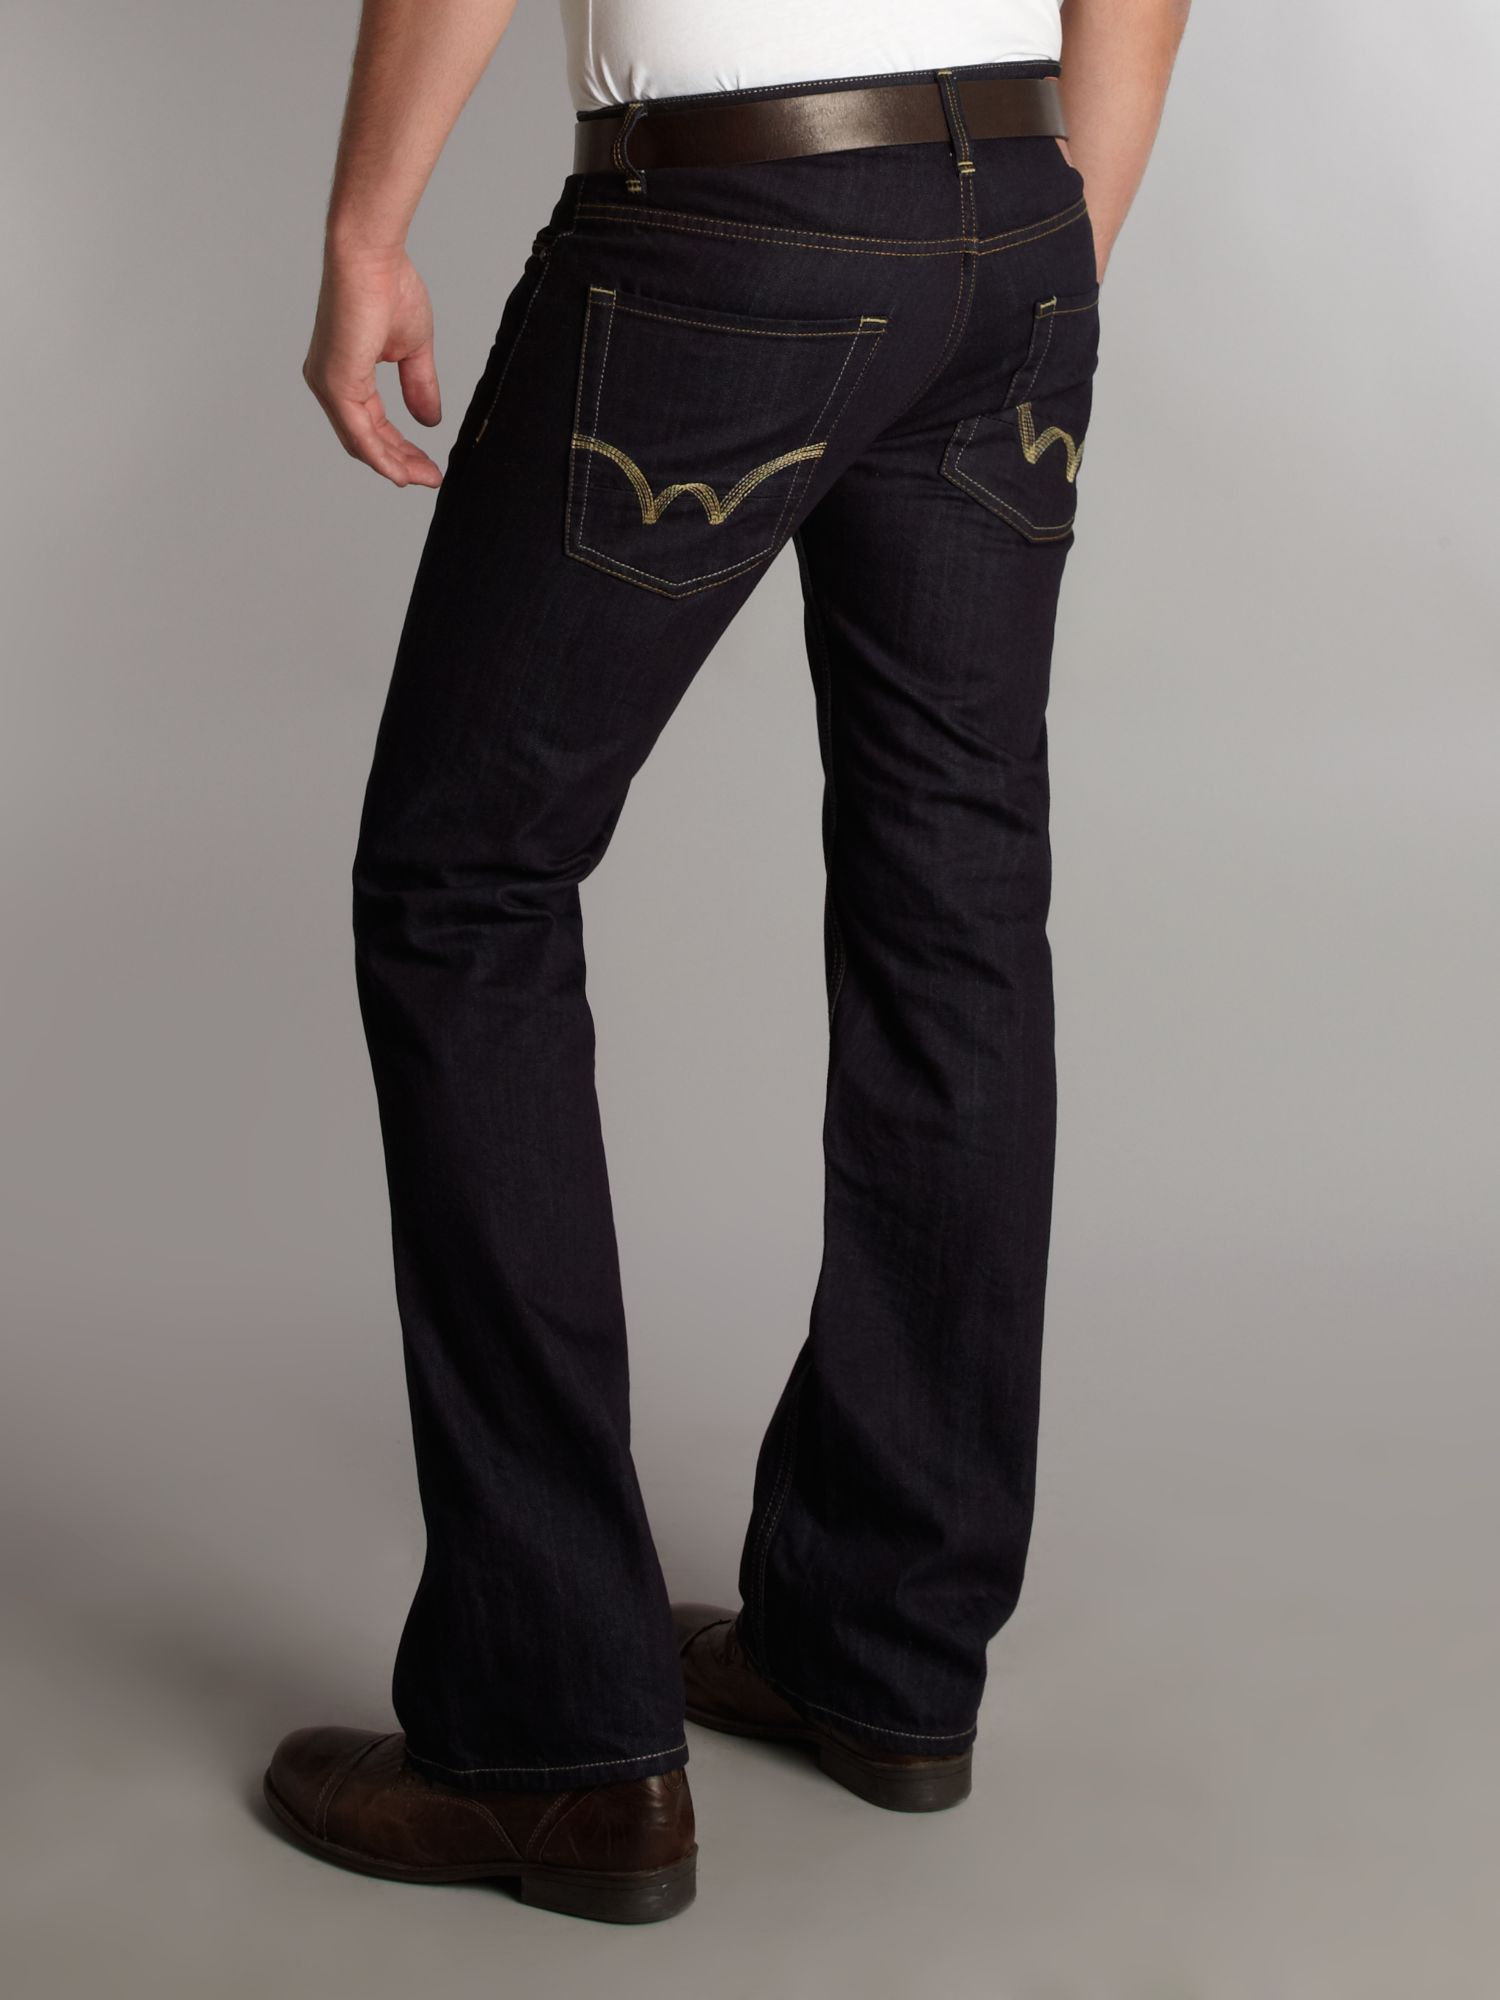 dark boot cut jeans for men